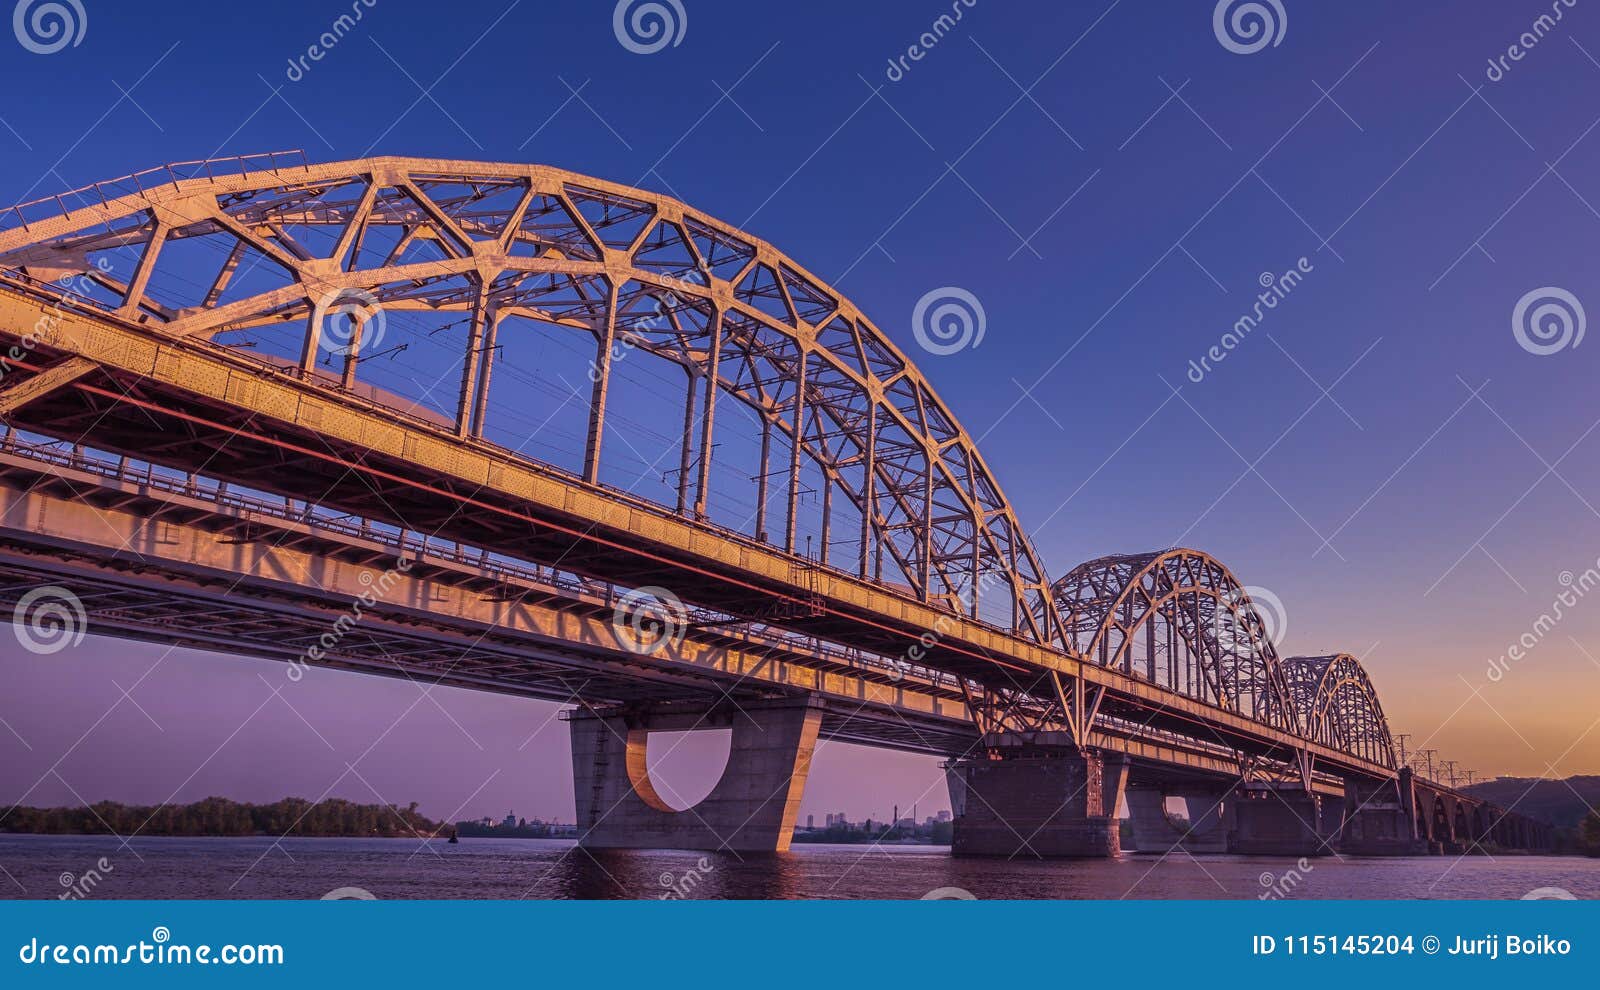 high dynamic range imaging. metro bridge. kiev,ukraine